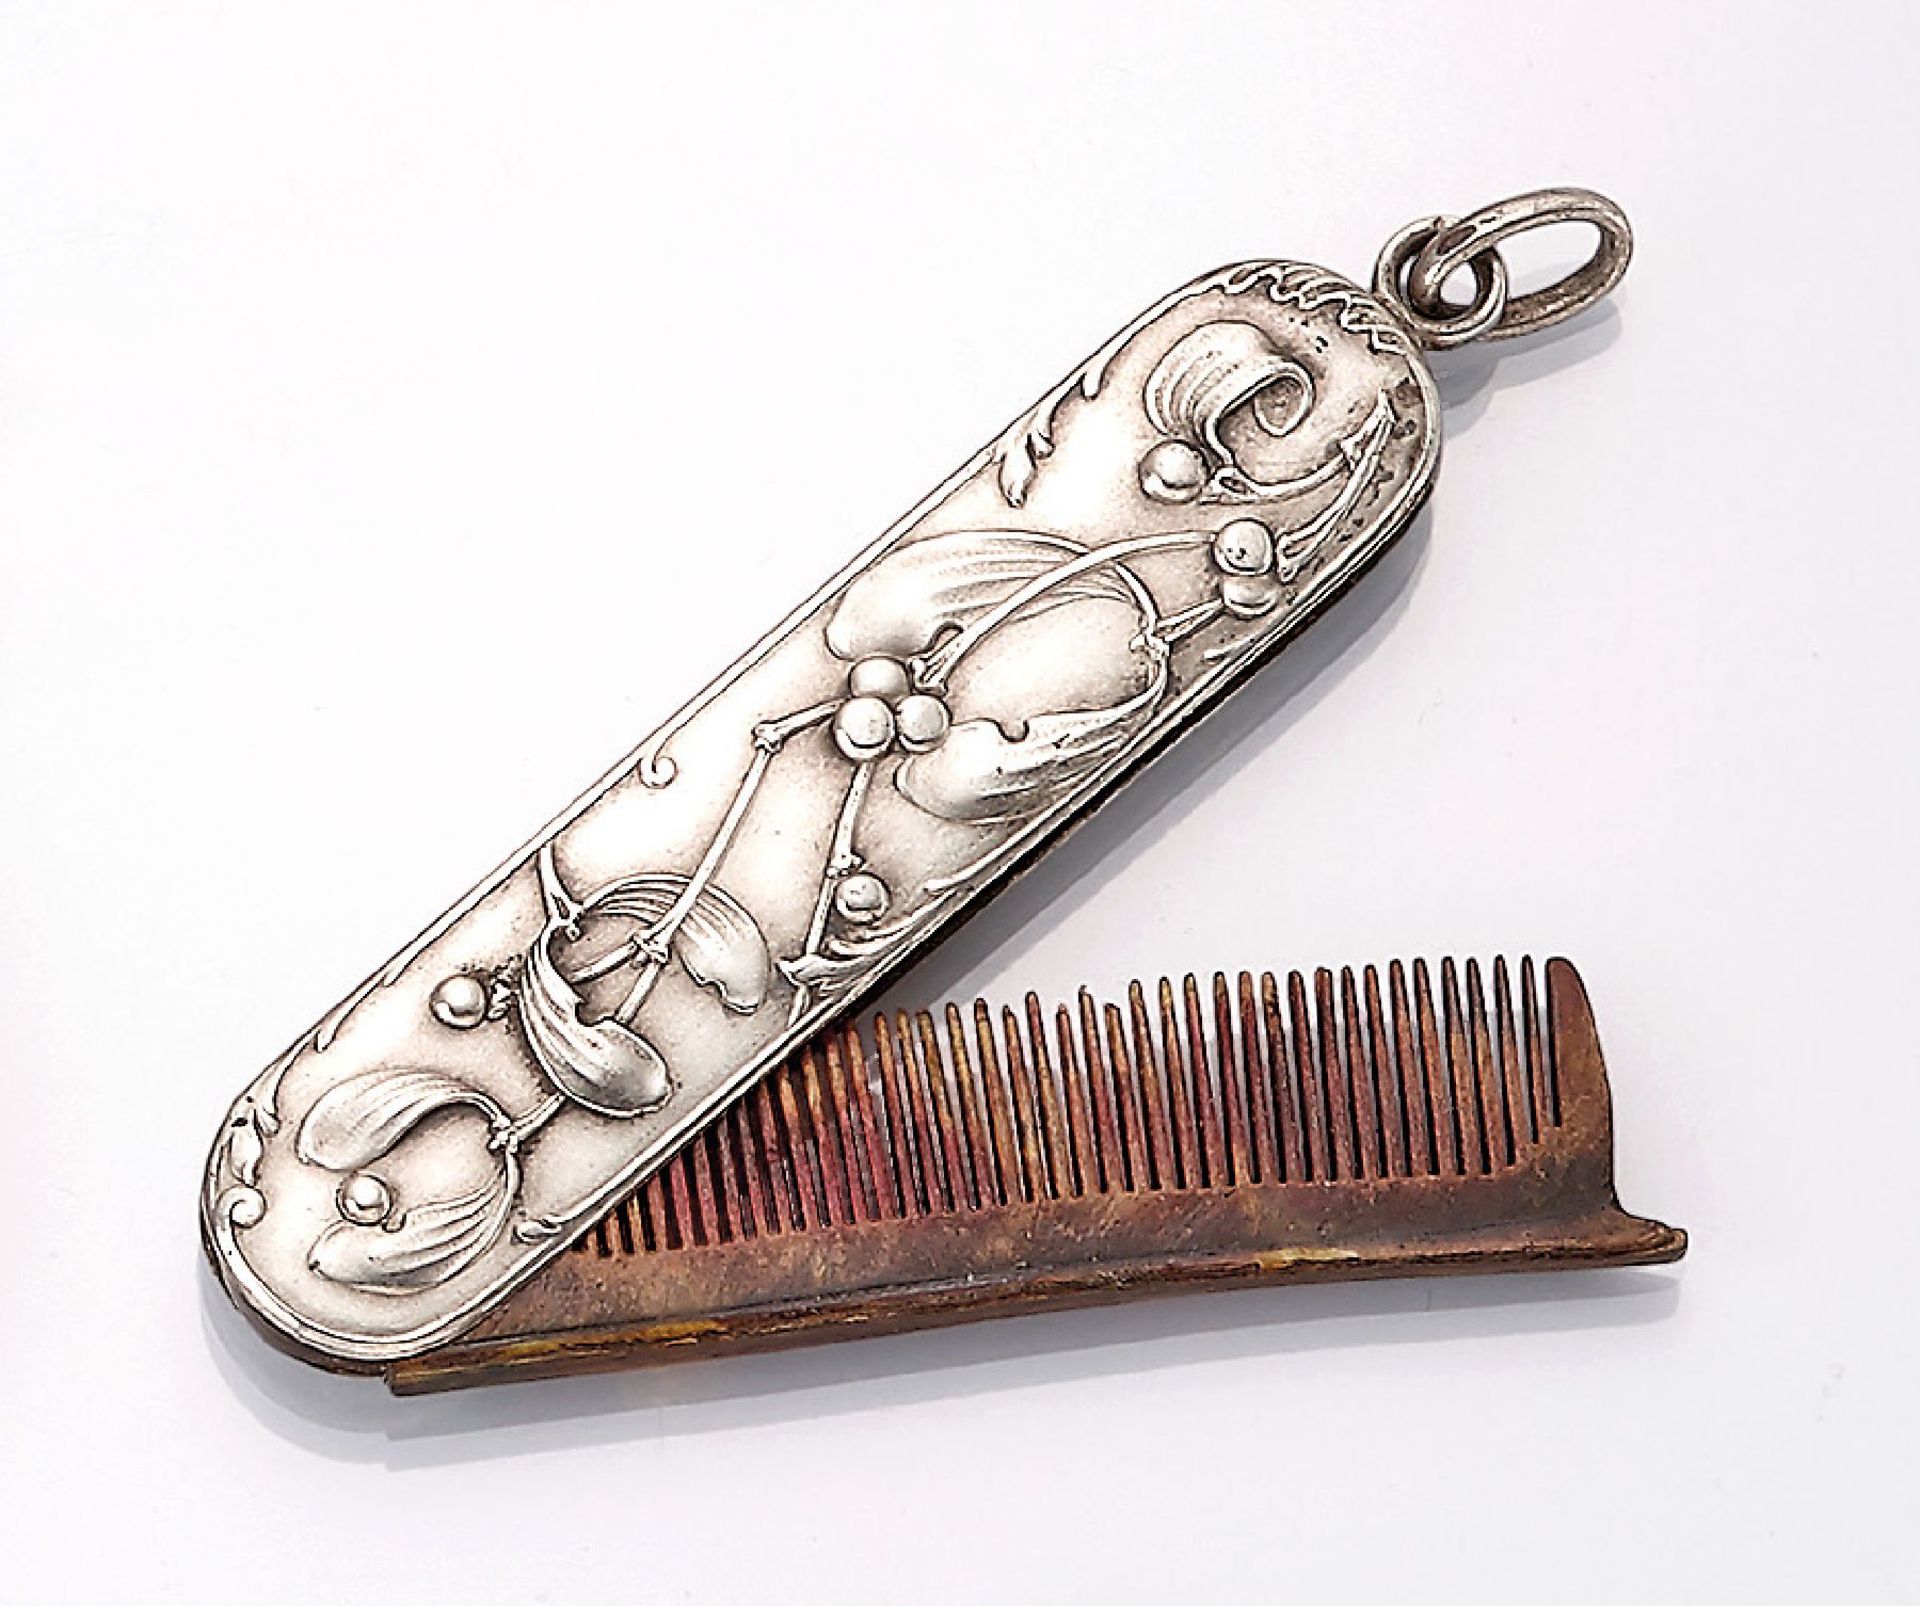 Moustache comb as pendant, France approx. 1900 , 800 silver, decor of mistletoe, comb retractable,